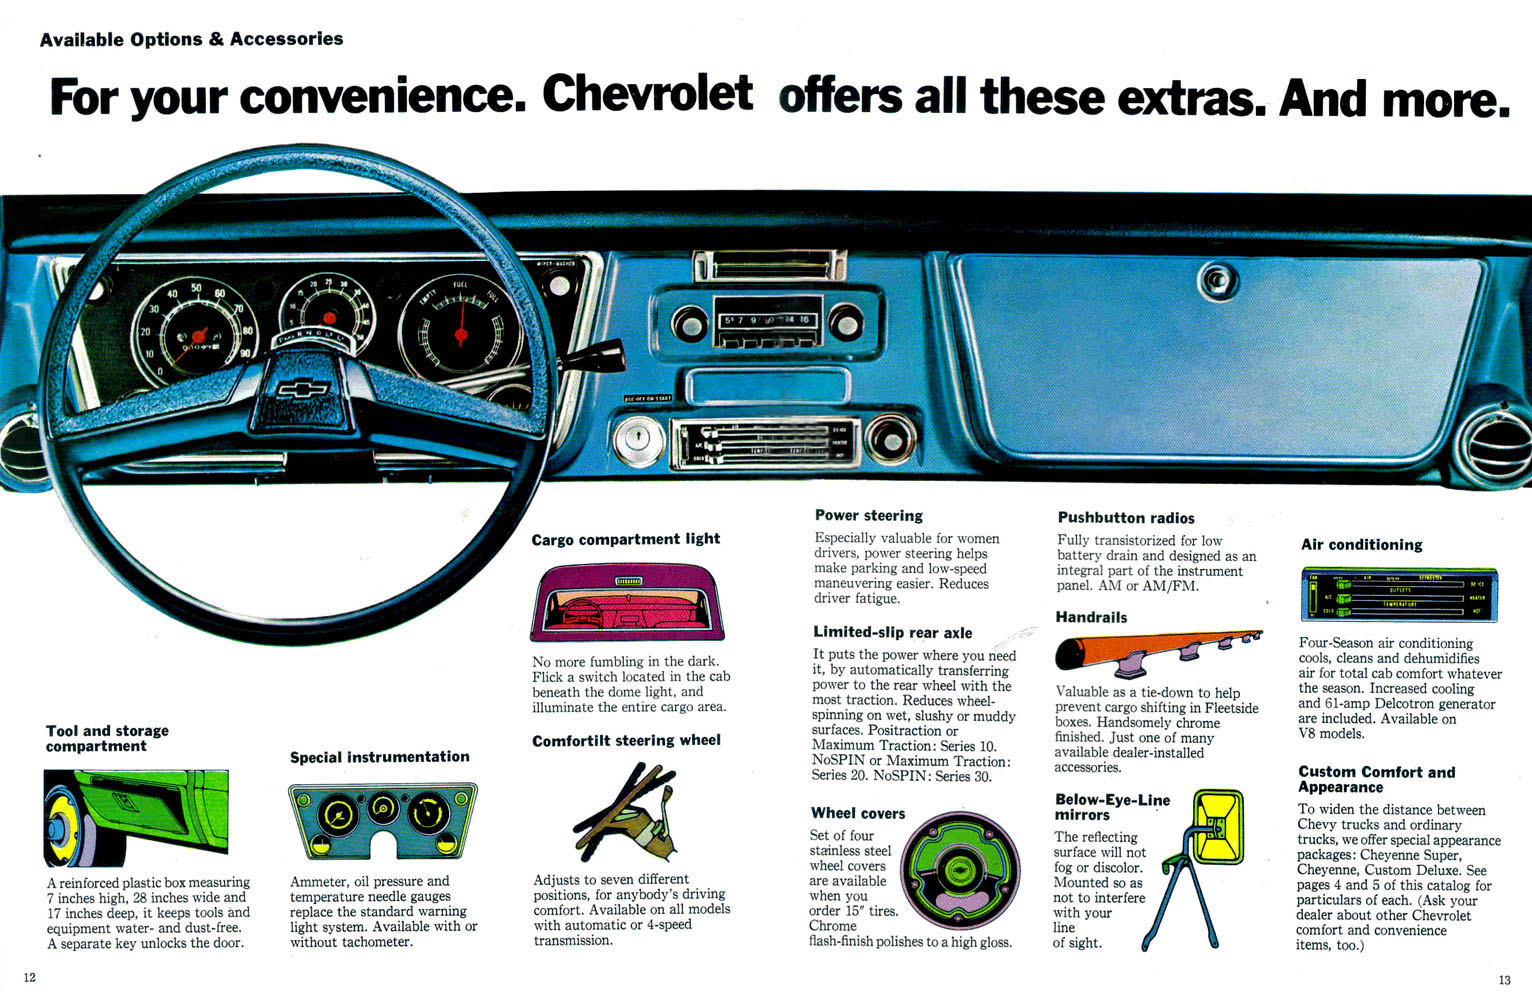 1972 Chevrolet Trucks Brochure Page 4